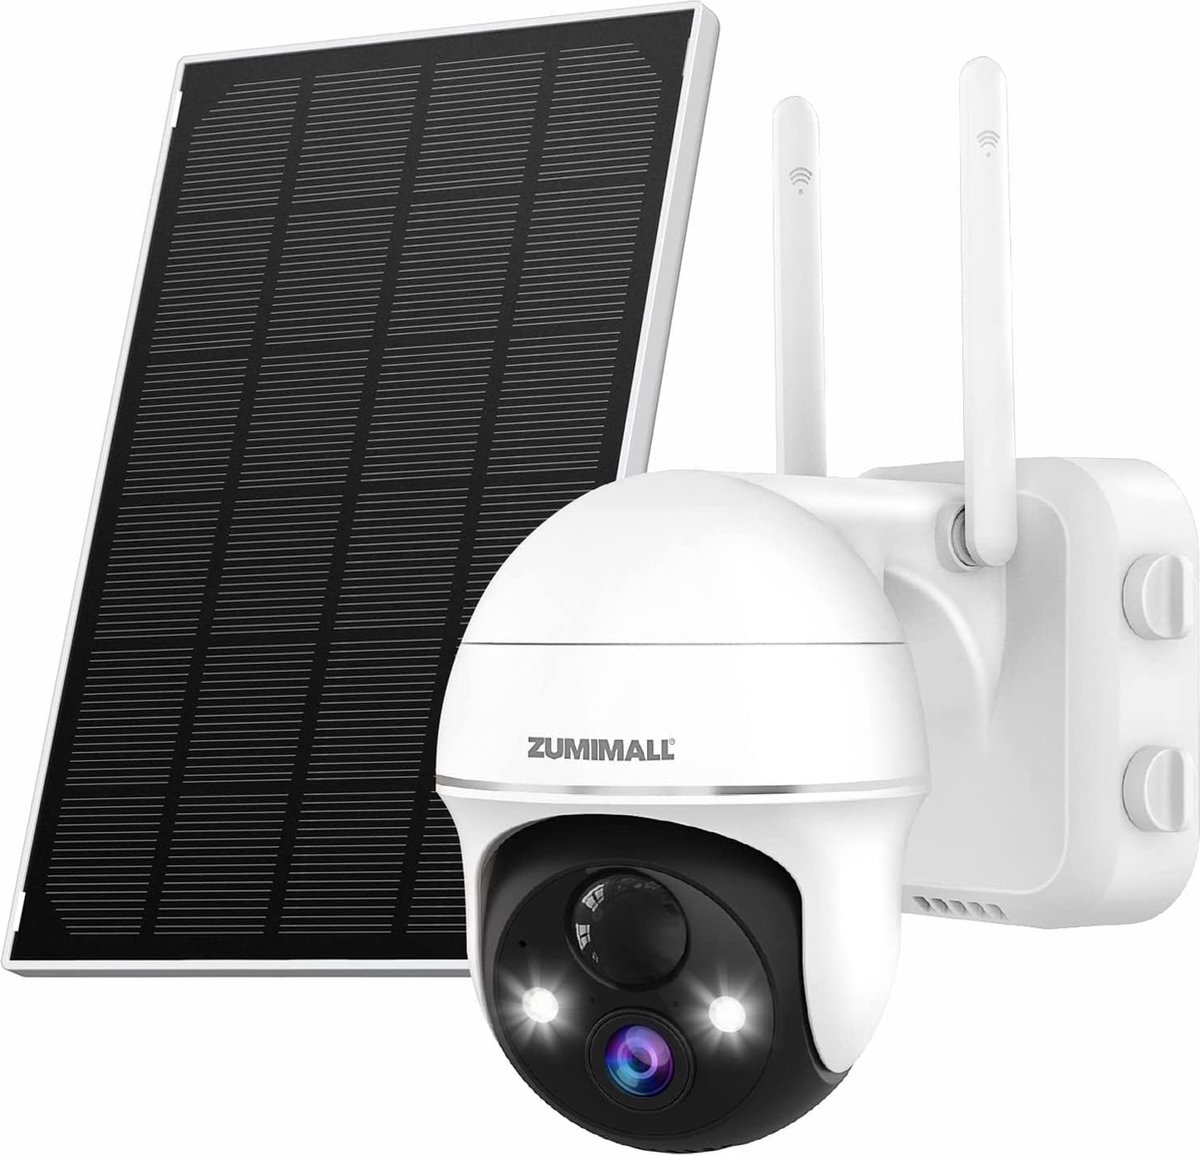 Zumimall ZS-GX2K Draadloze Beveiligingscamera voor Buiten - Duurzaam - 2K Resolutie - Kleuren Nachtzicht - Wi-Fi - PIR-Detectie - SD / Cloud Opslag - 360 graden - Spotlight en Sirene